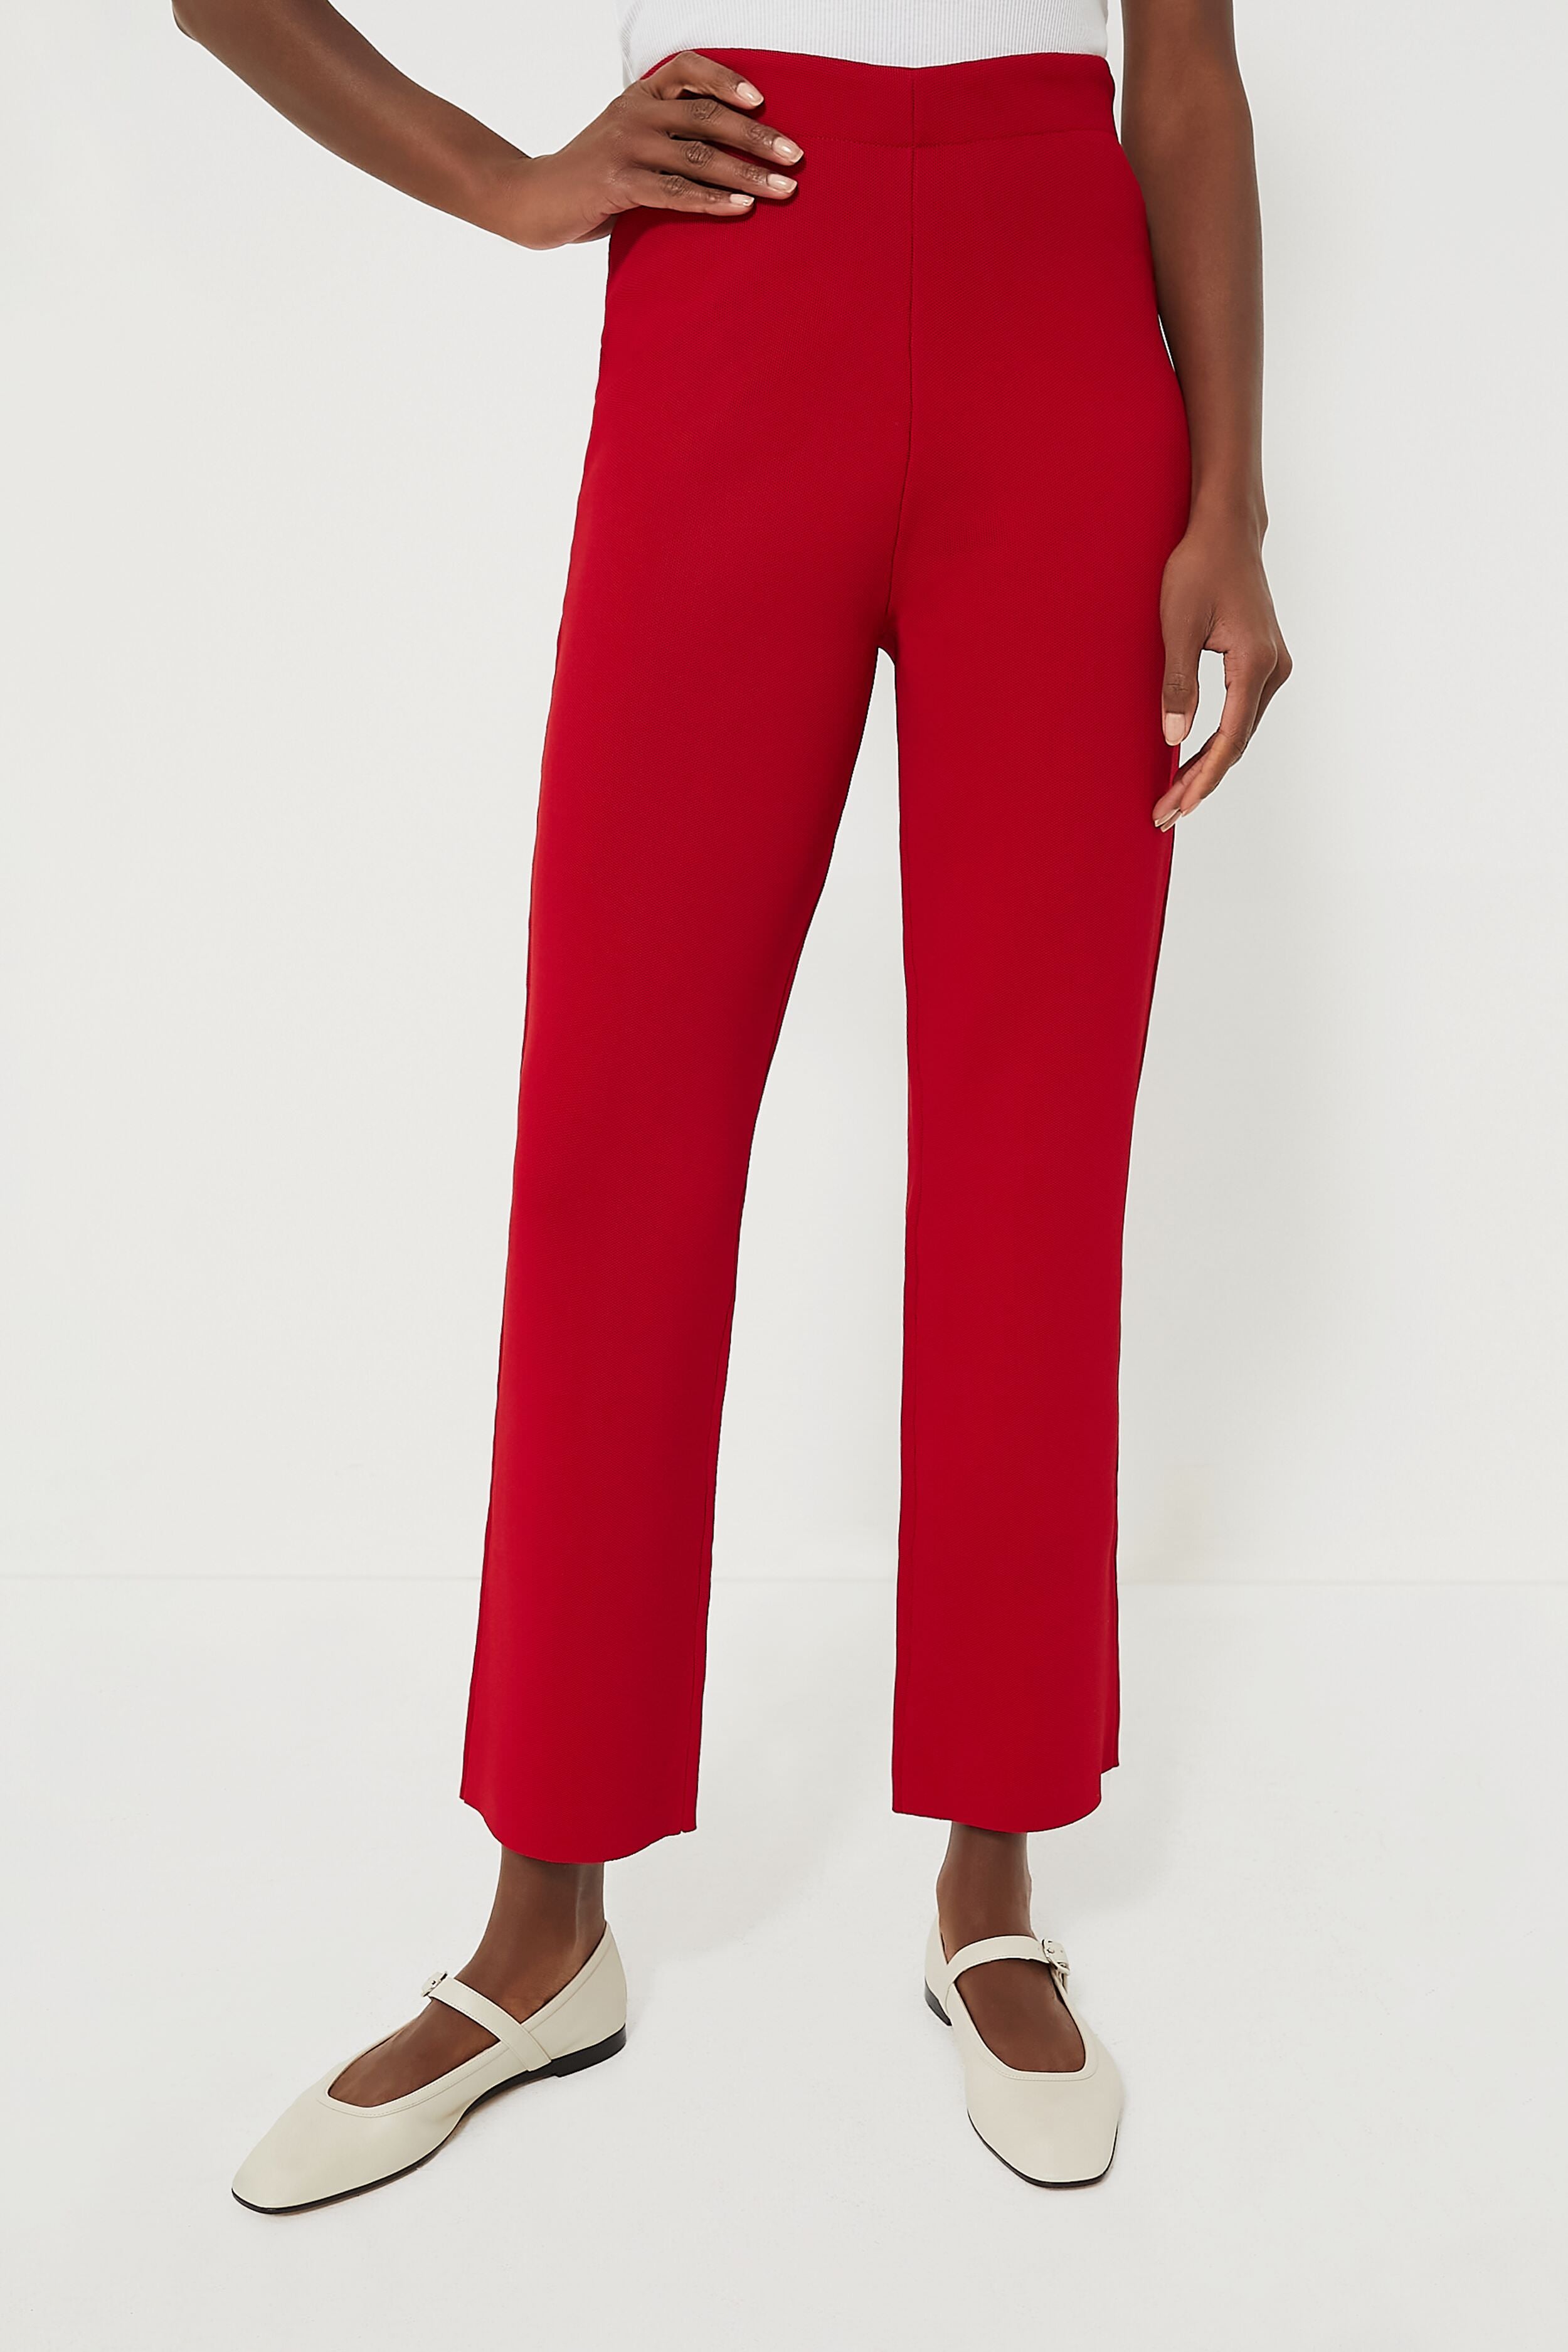 Red Compression Knit Ashford Pants